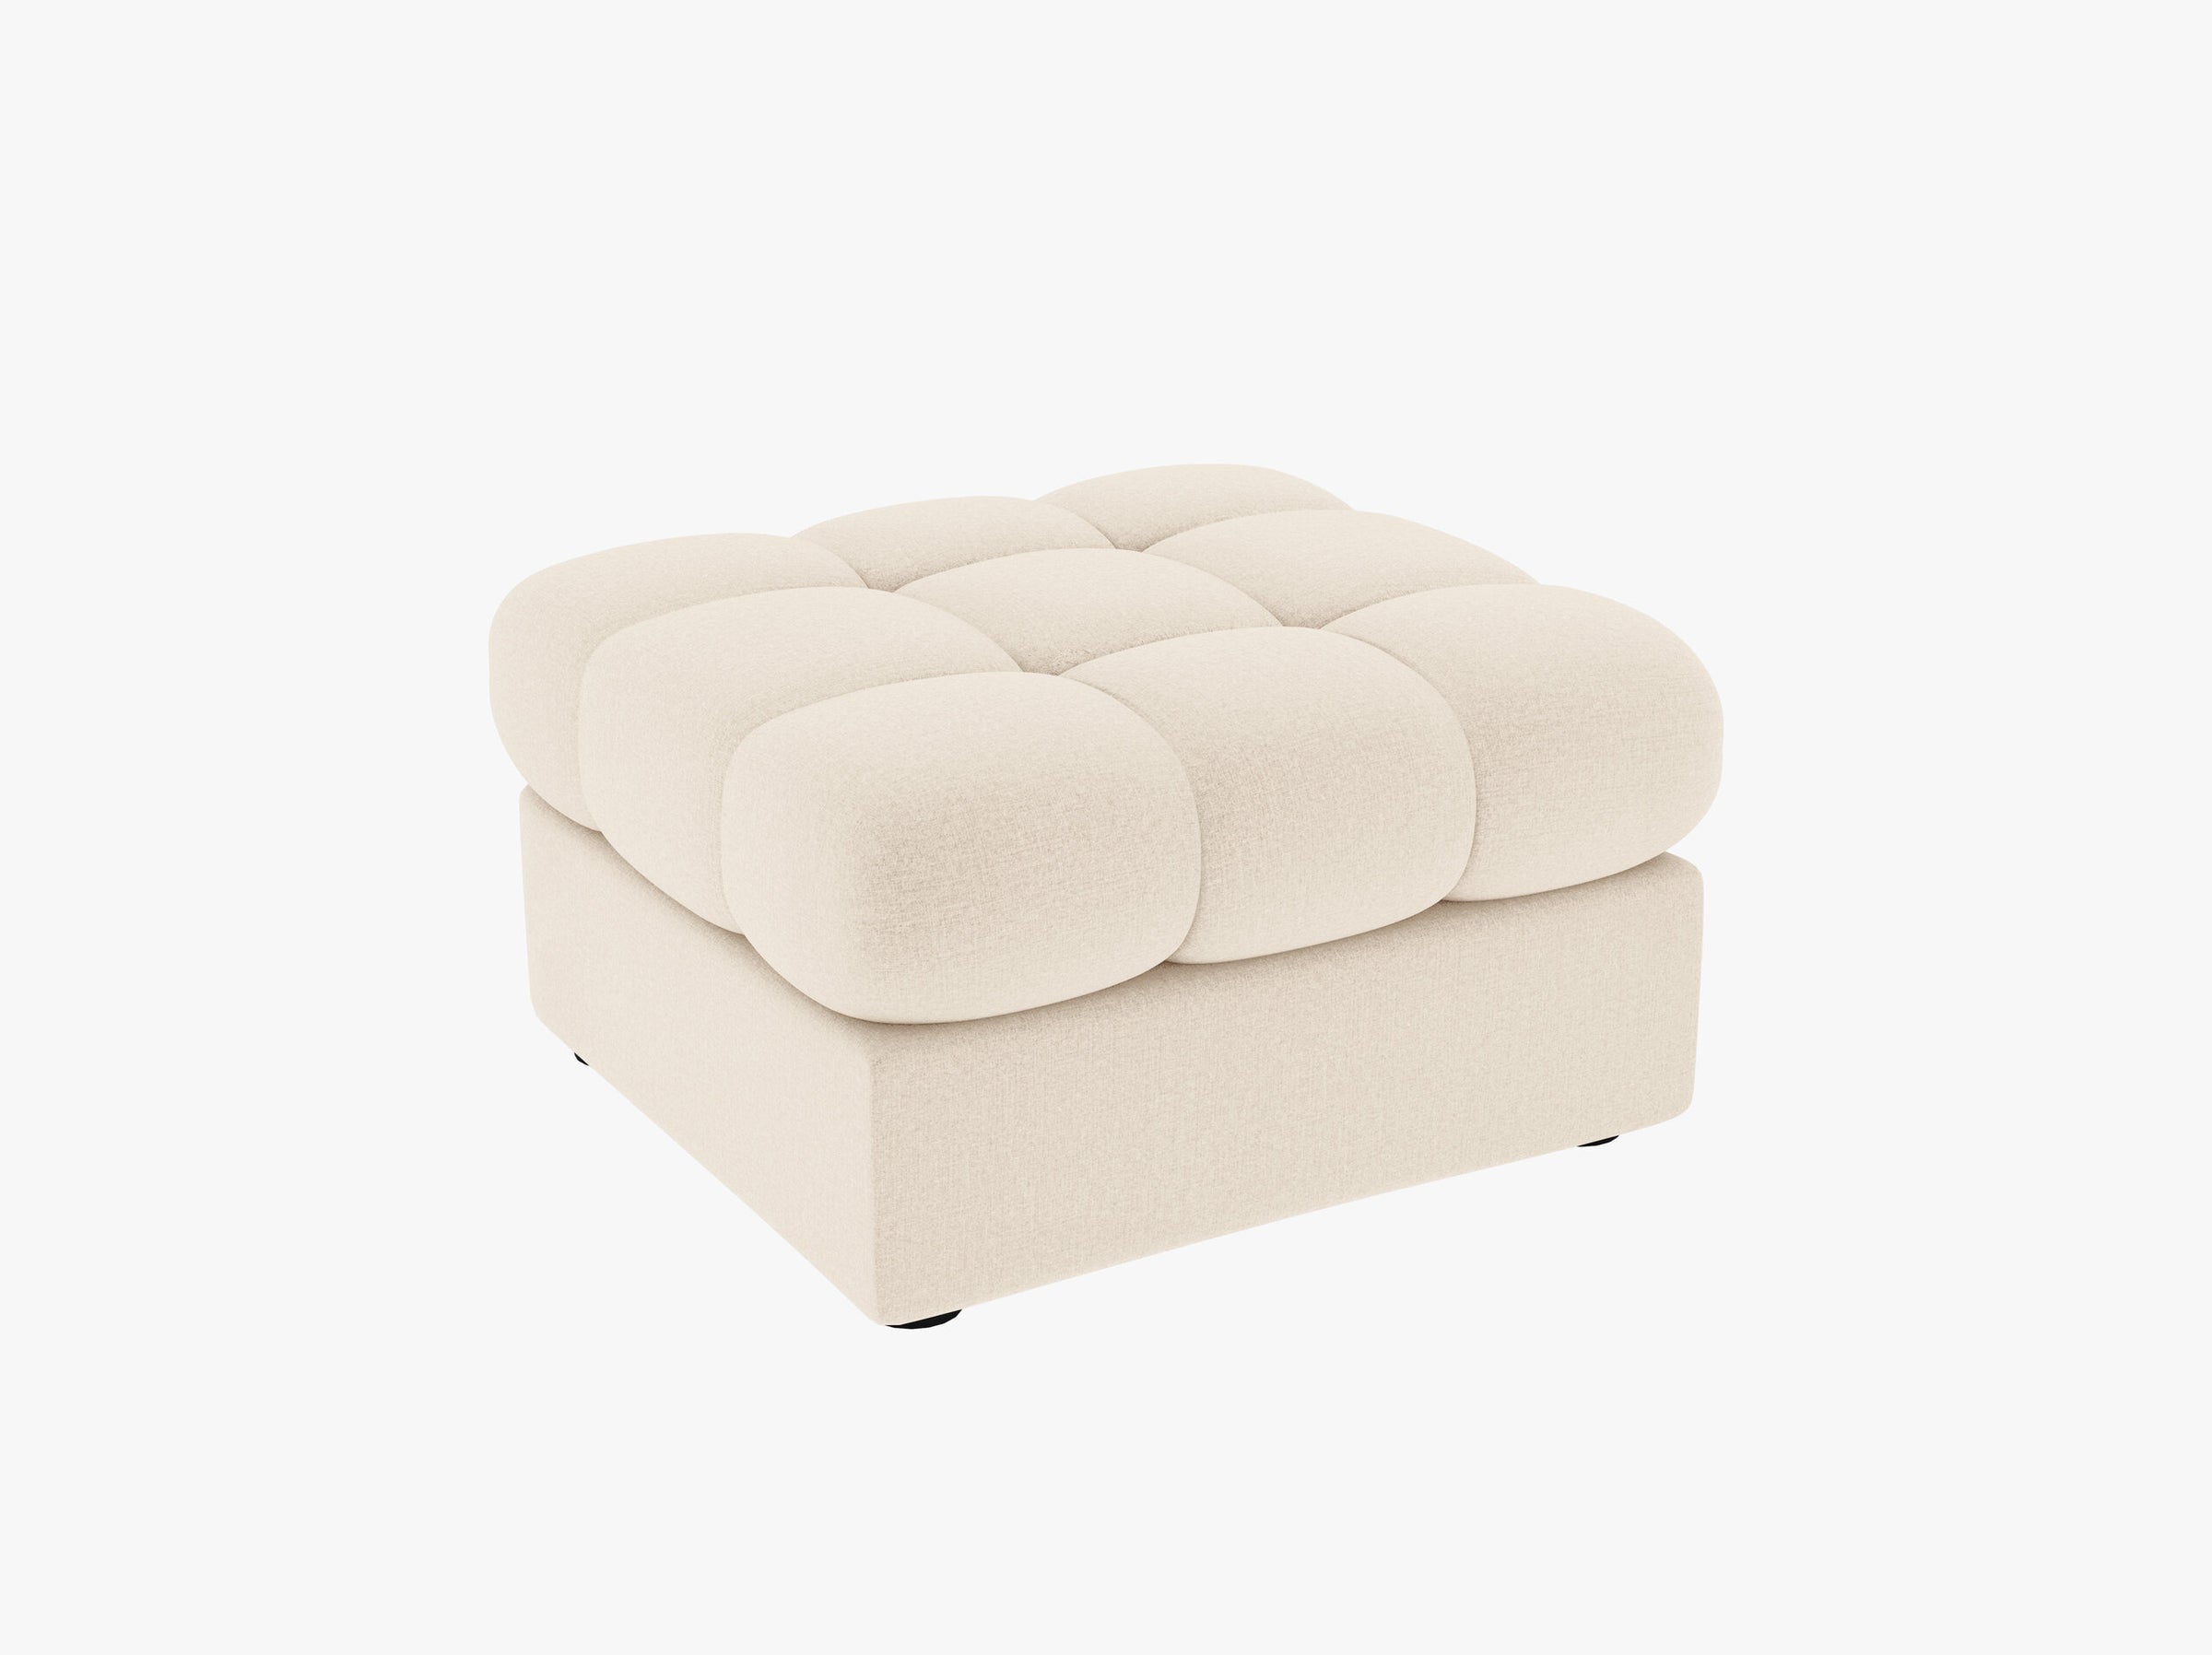 Justin sofas structured fabric light beige